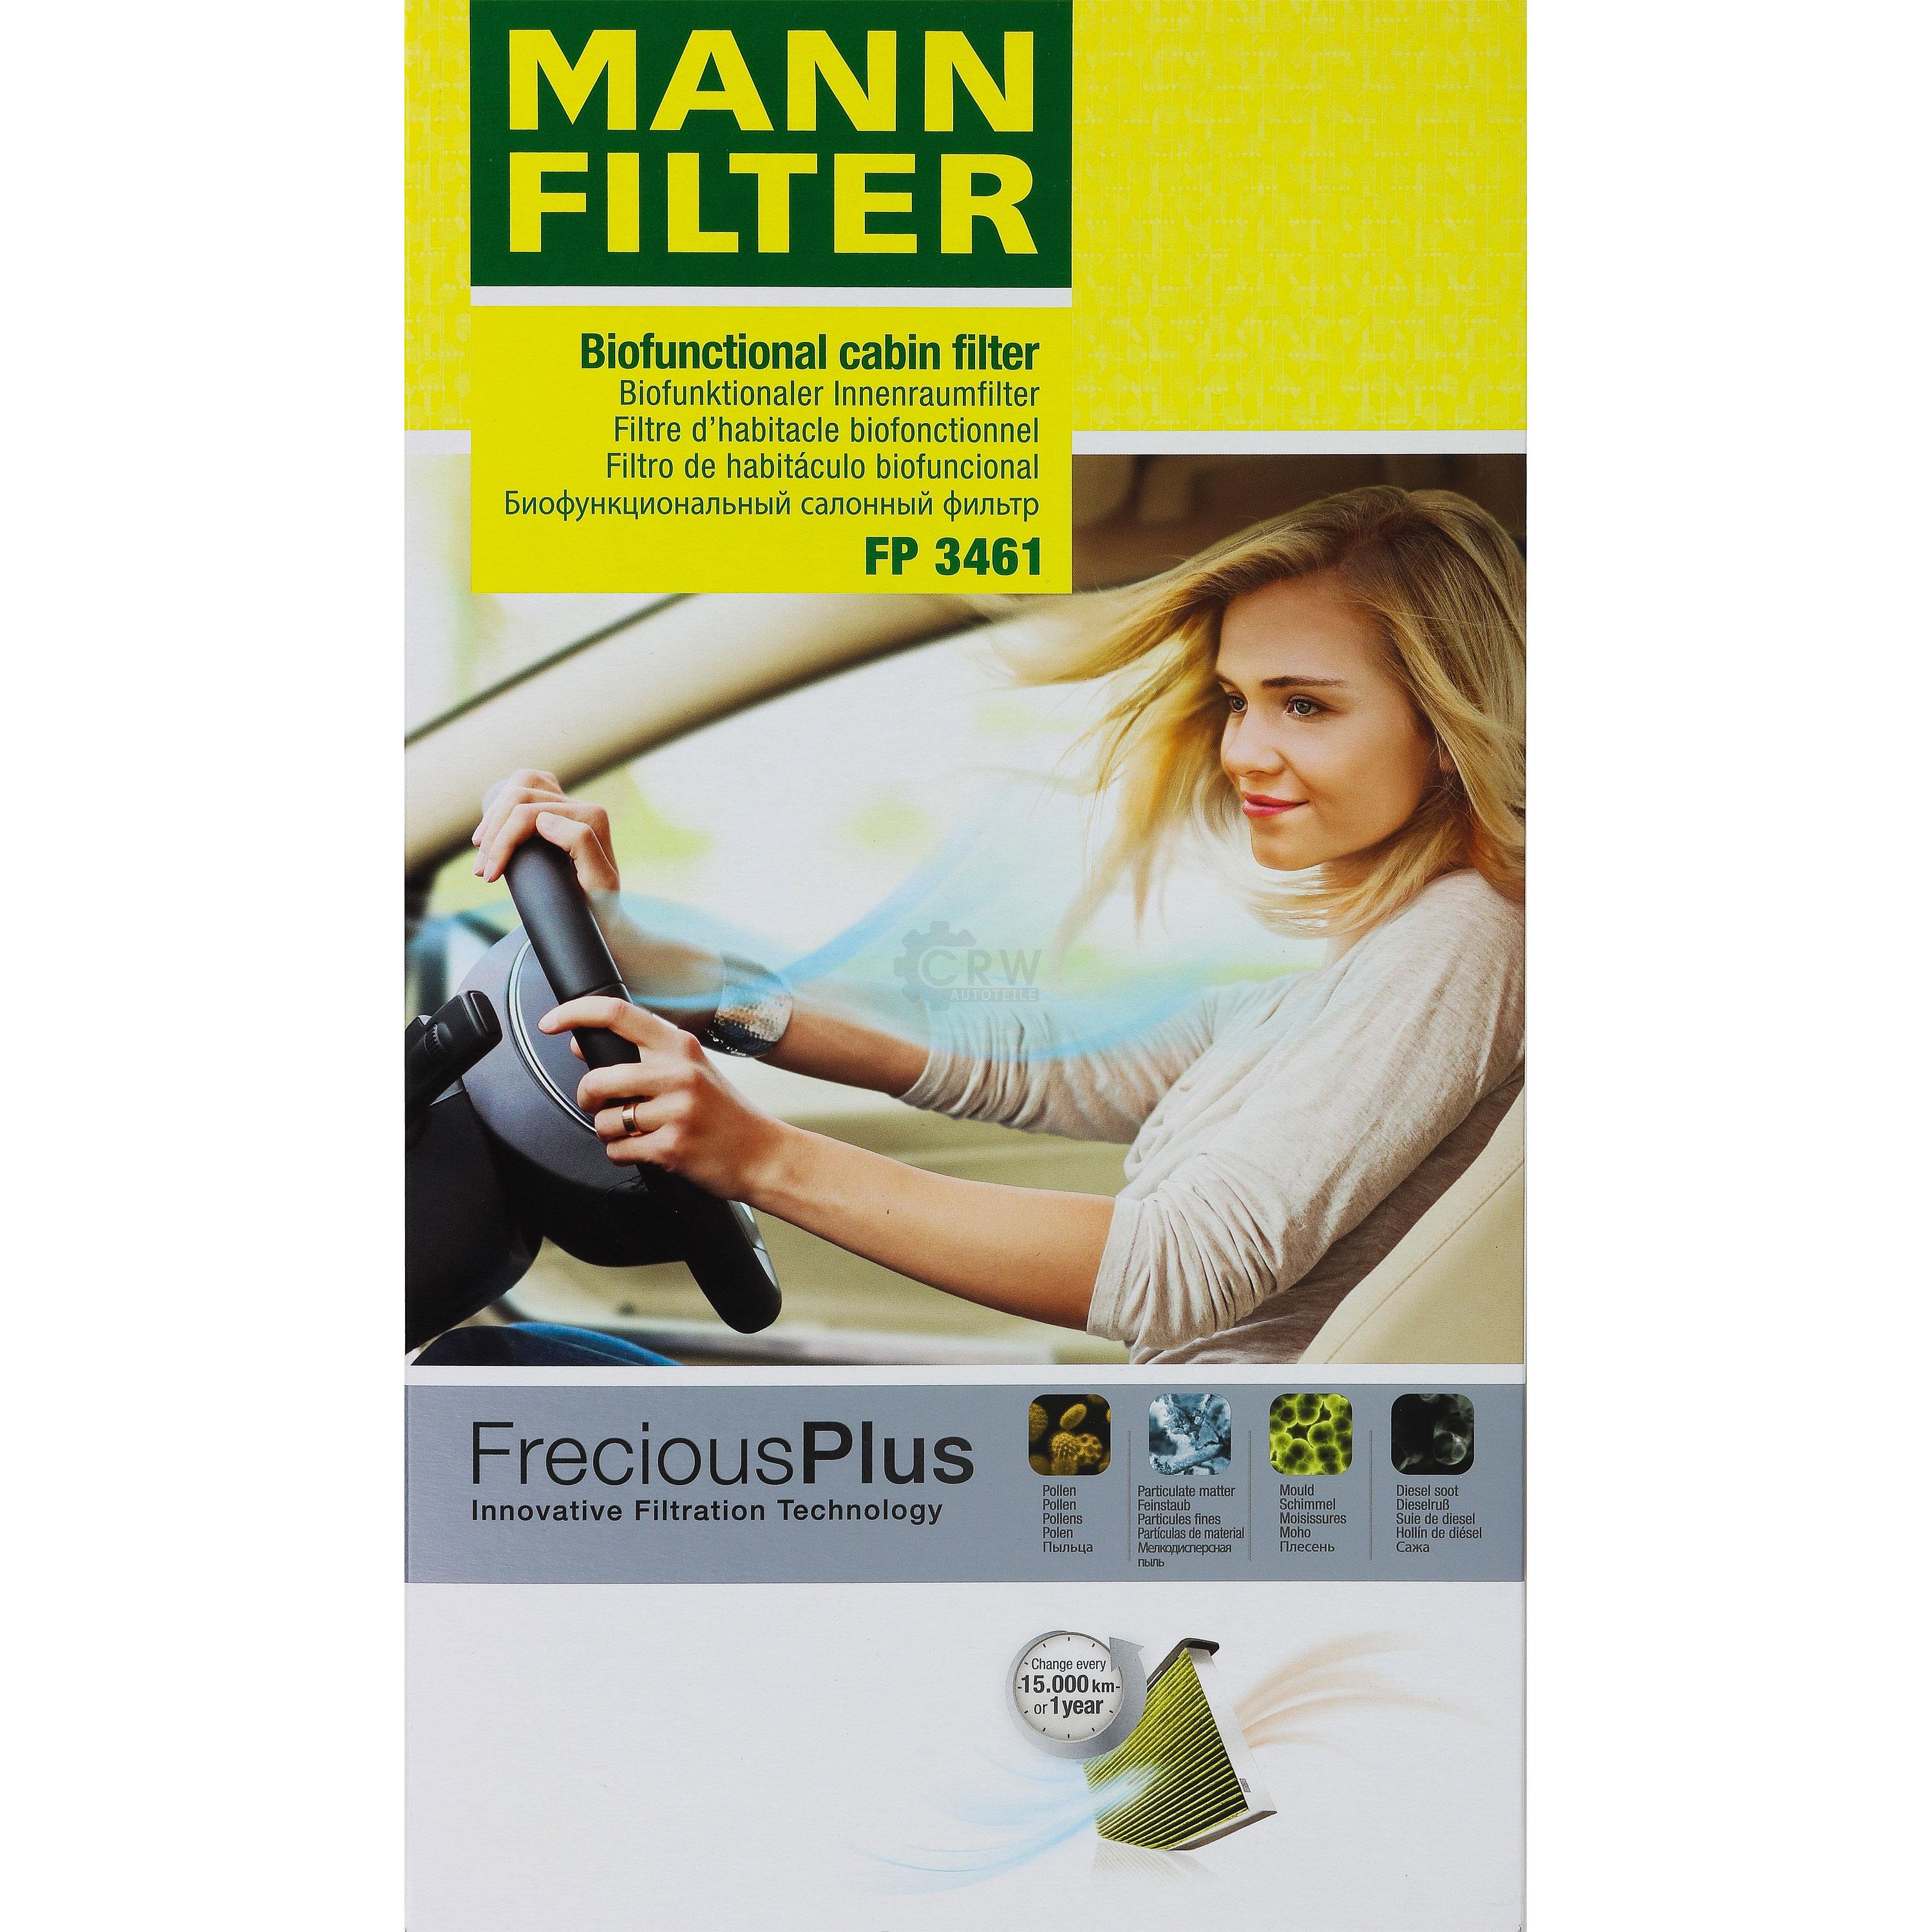 MANN-Filter Innenraumfilter Biofunctional für Allergiker FP 3461